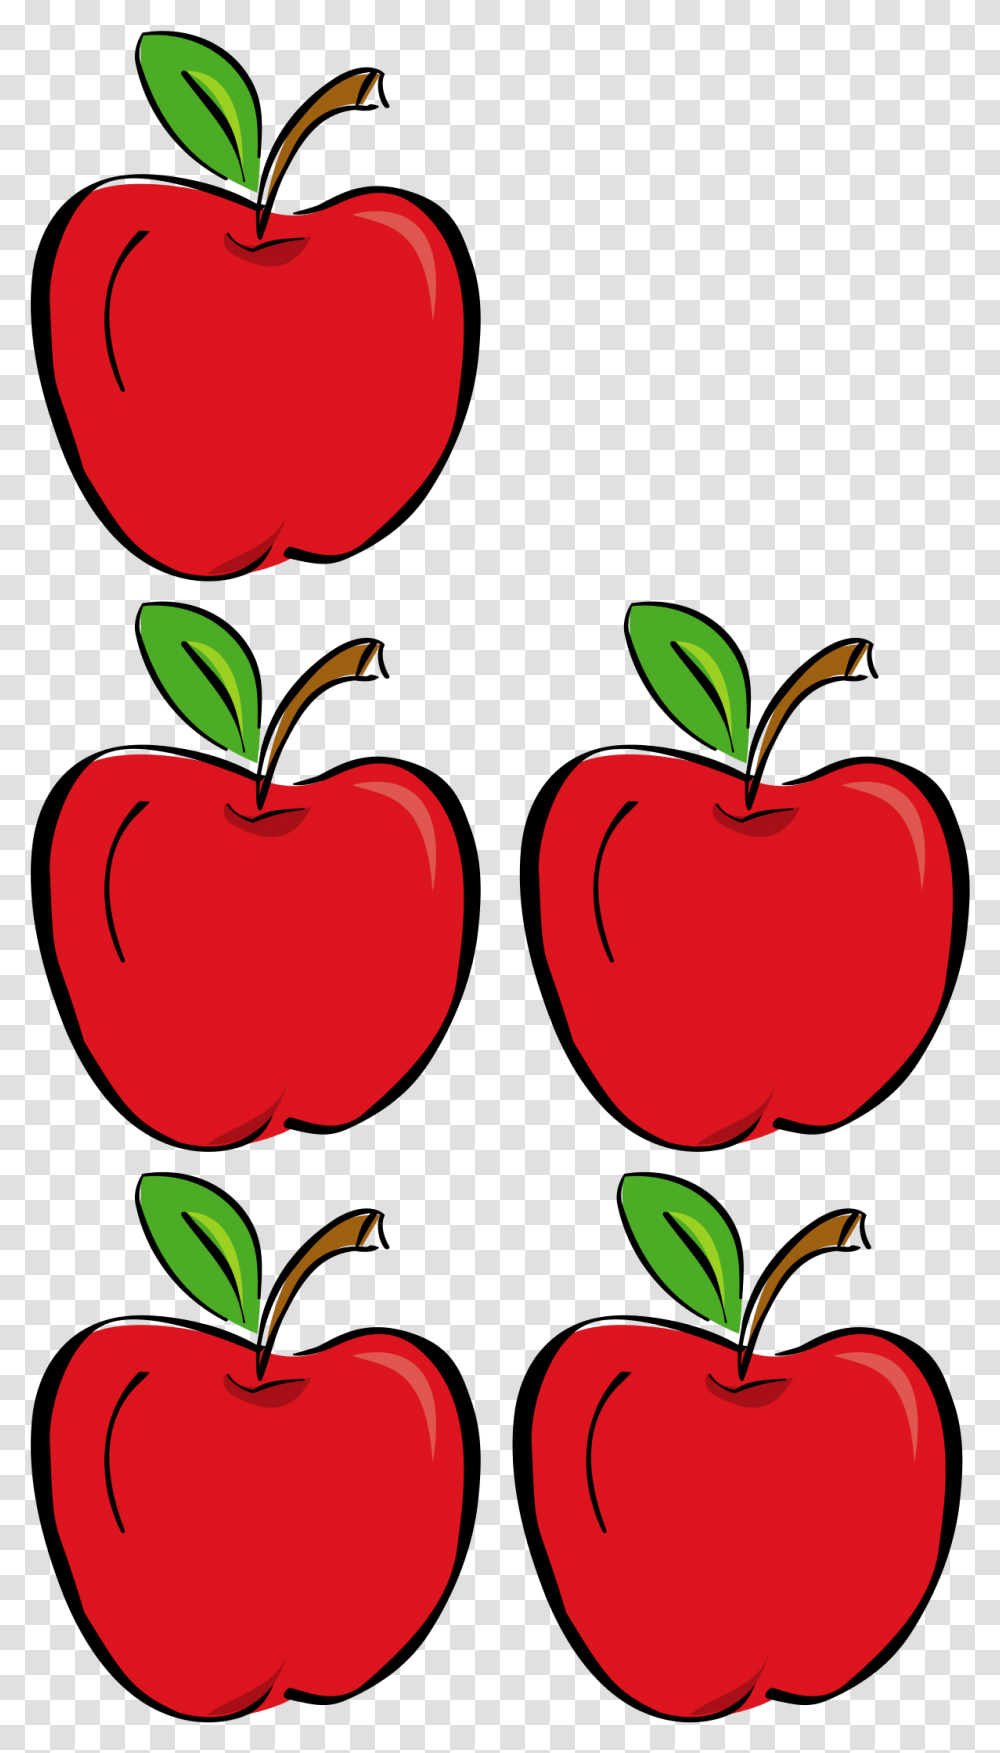 Addition Wikipedia Fraction Bar Clip Art Fraction Clip Conjunto De 5 Elementos, Plant, Fruit, Food, Apple Transparent Png